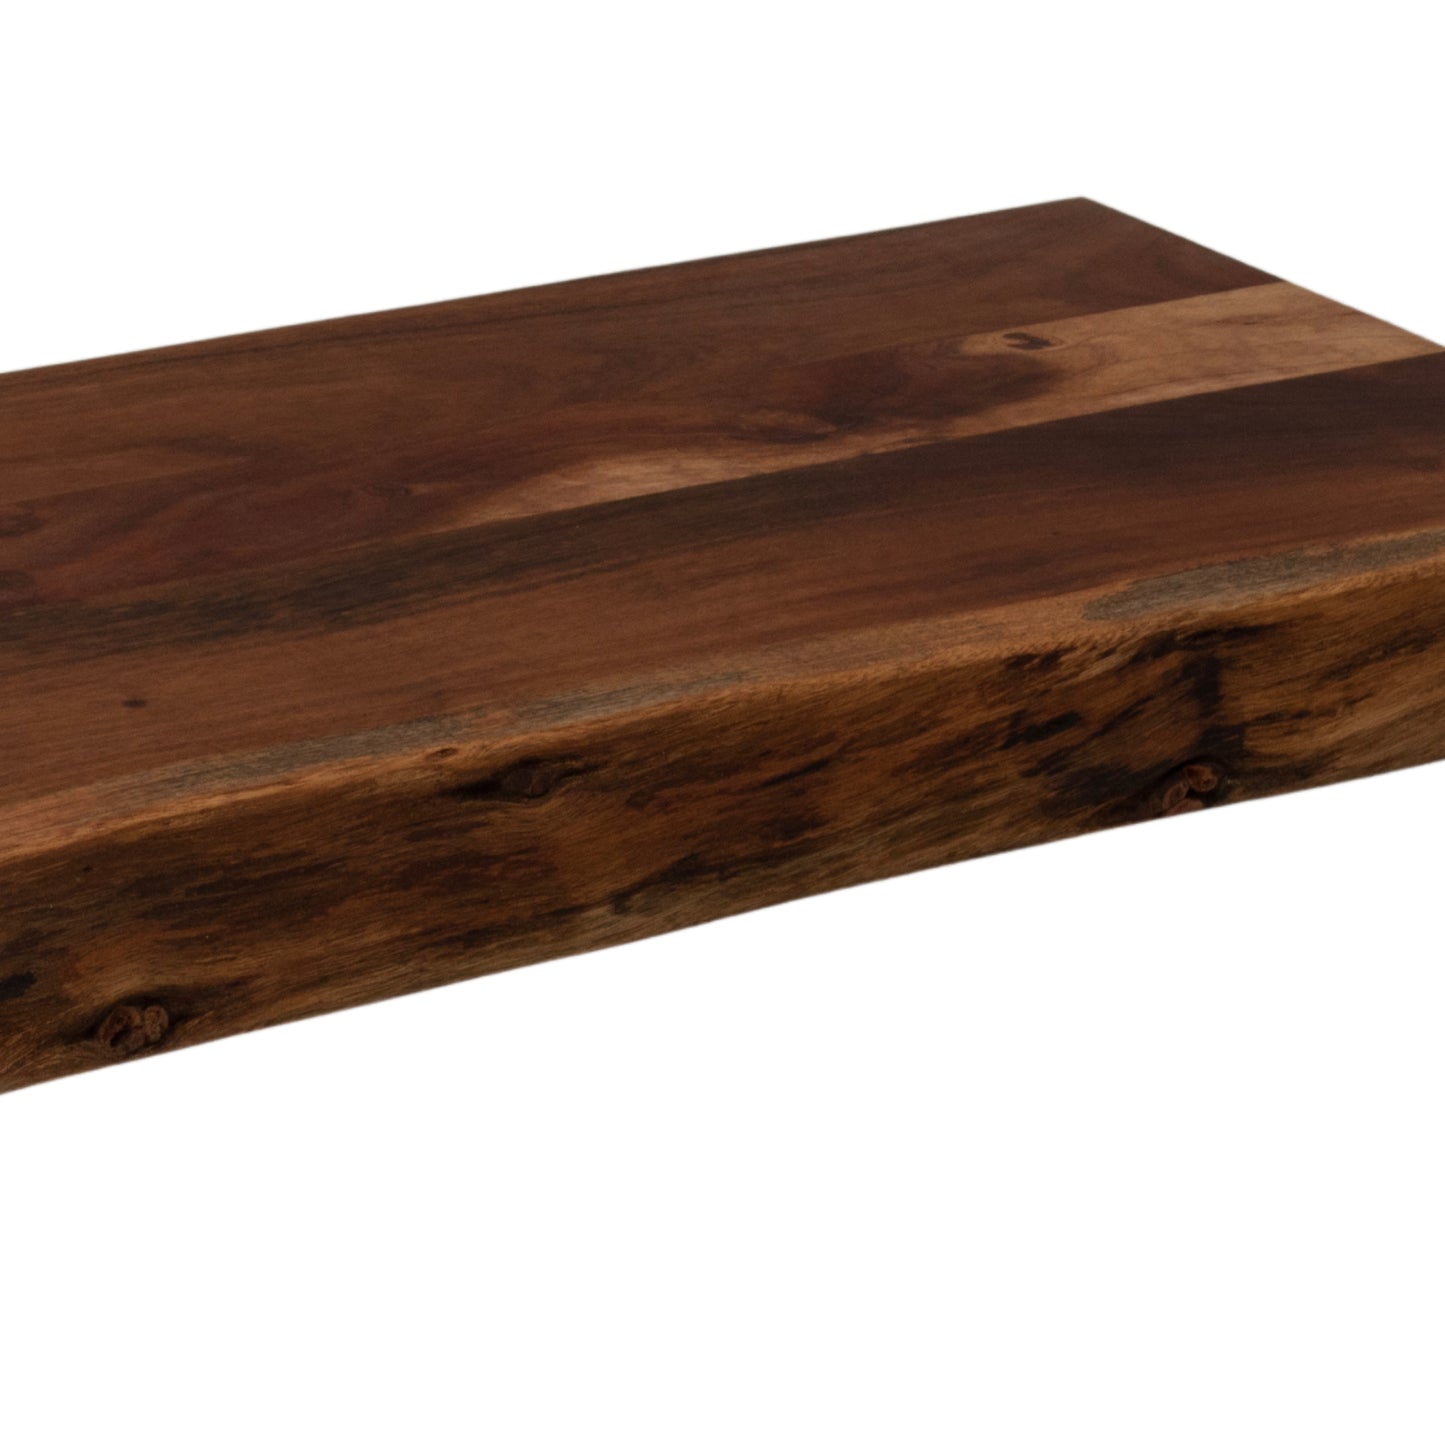 Large Rustic Wood Chopping Board